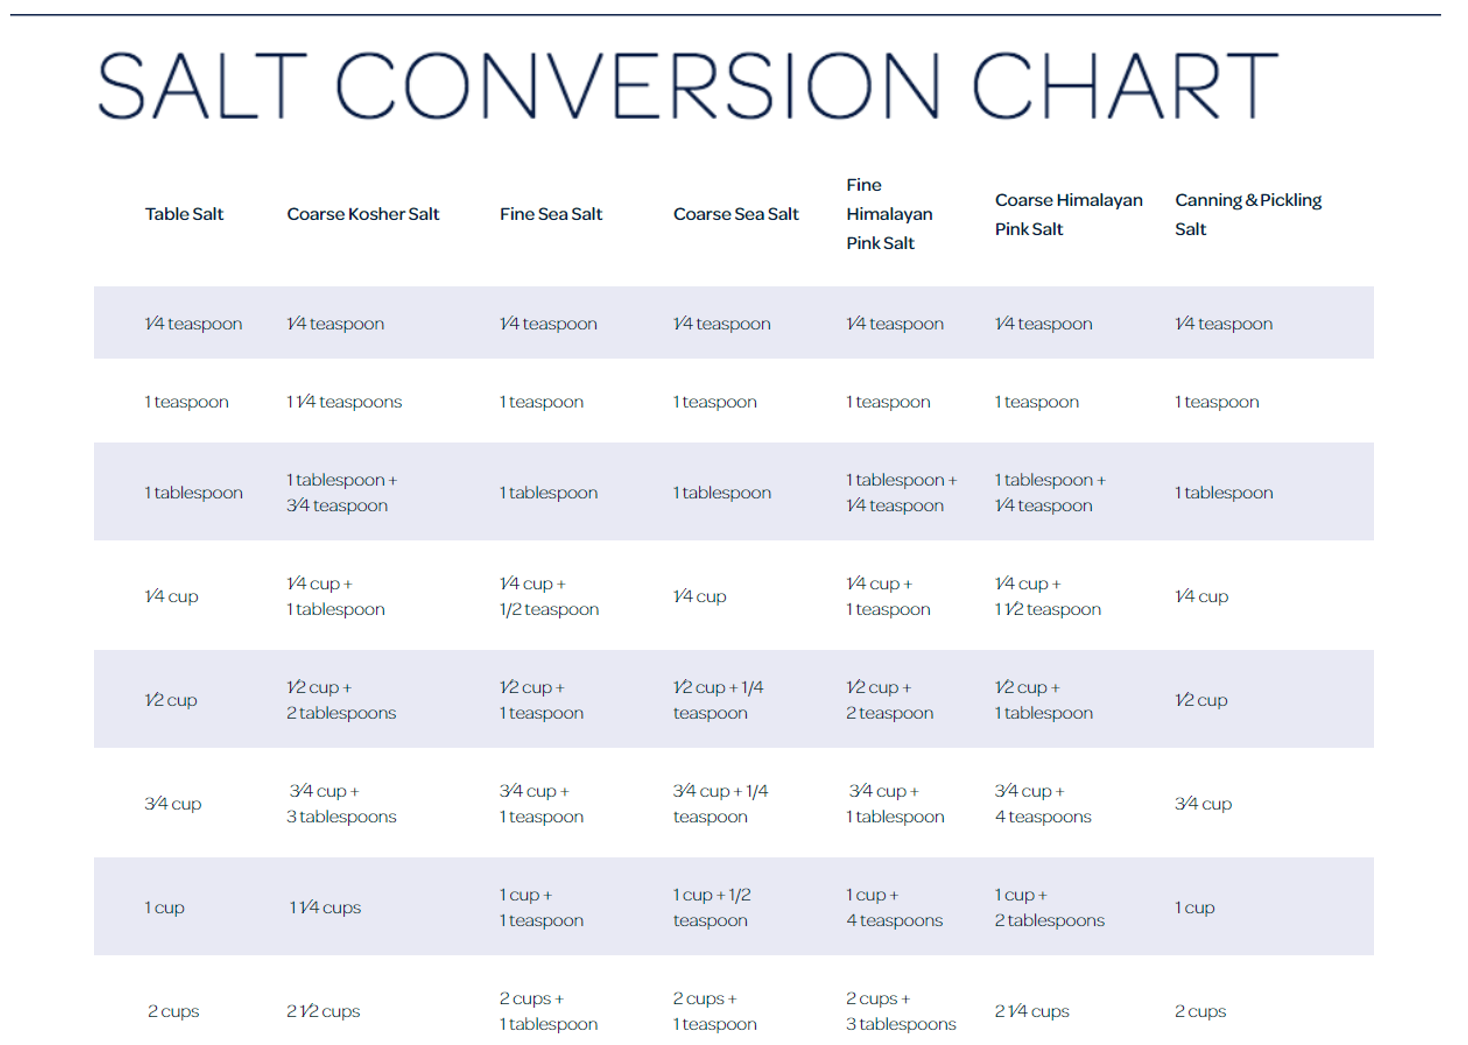 ib chemistry conversion chart